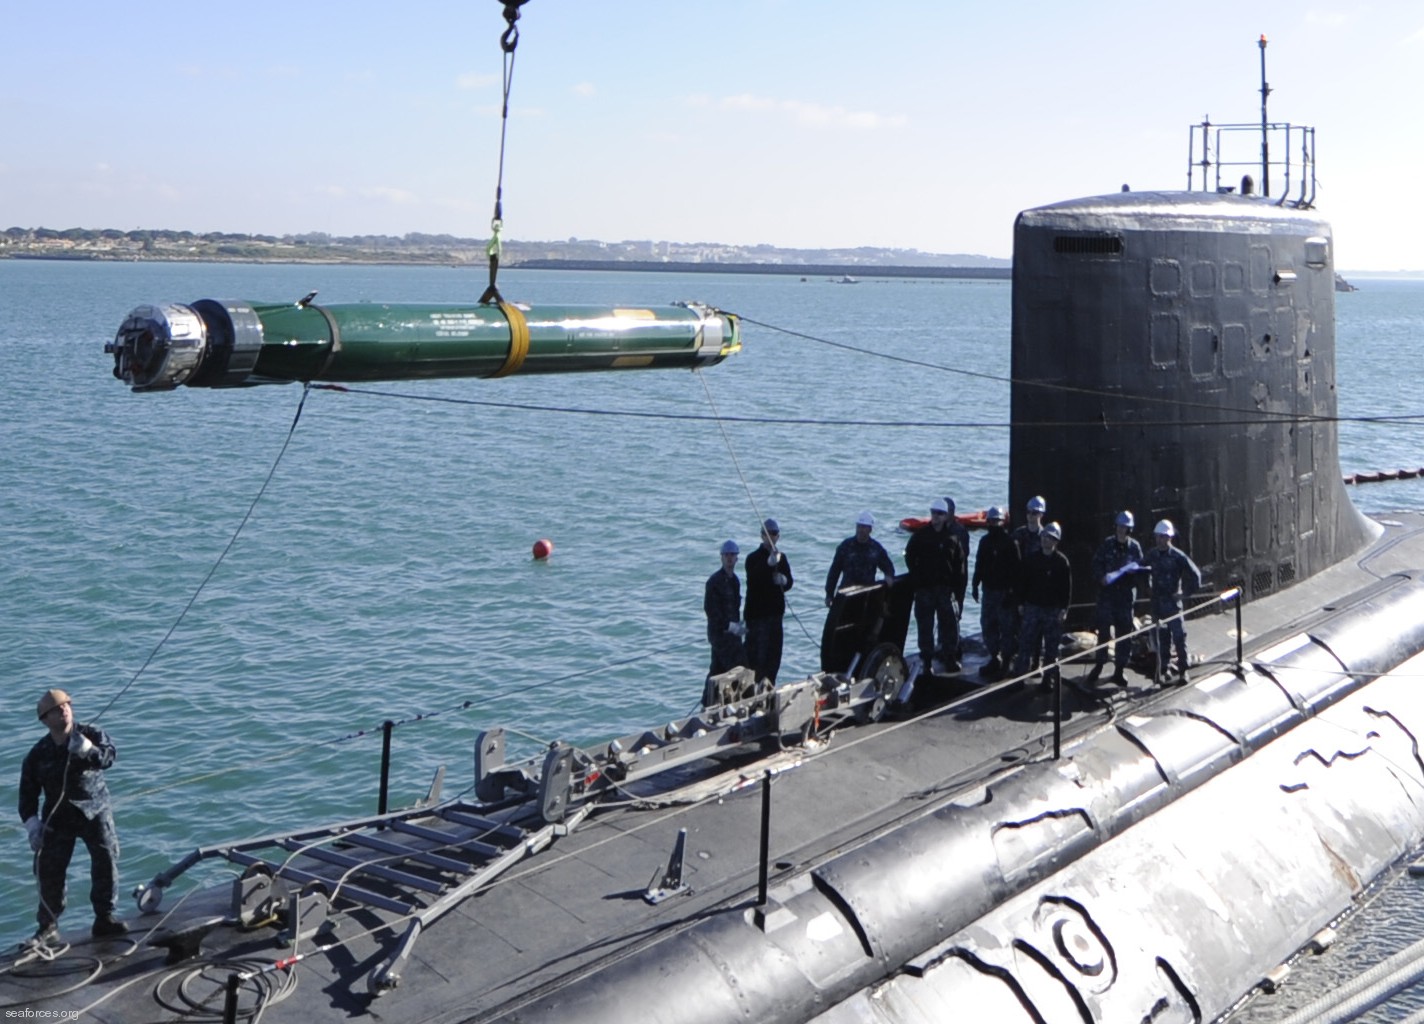 Suspendido, un torpedo MK-48 Mod6. Foto: seaforces.org